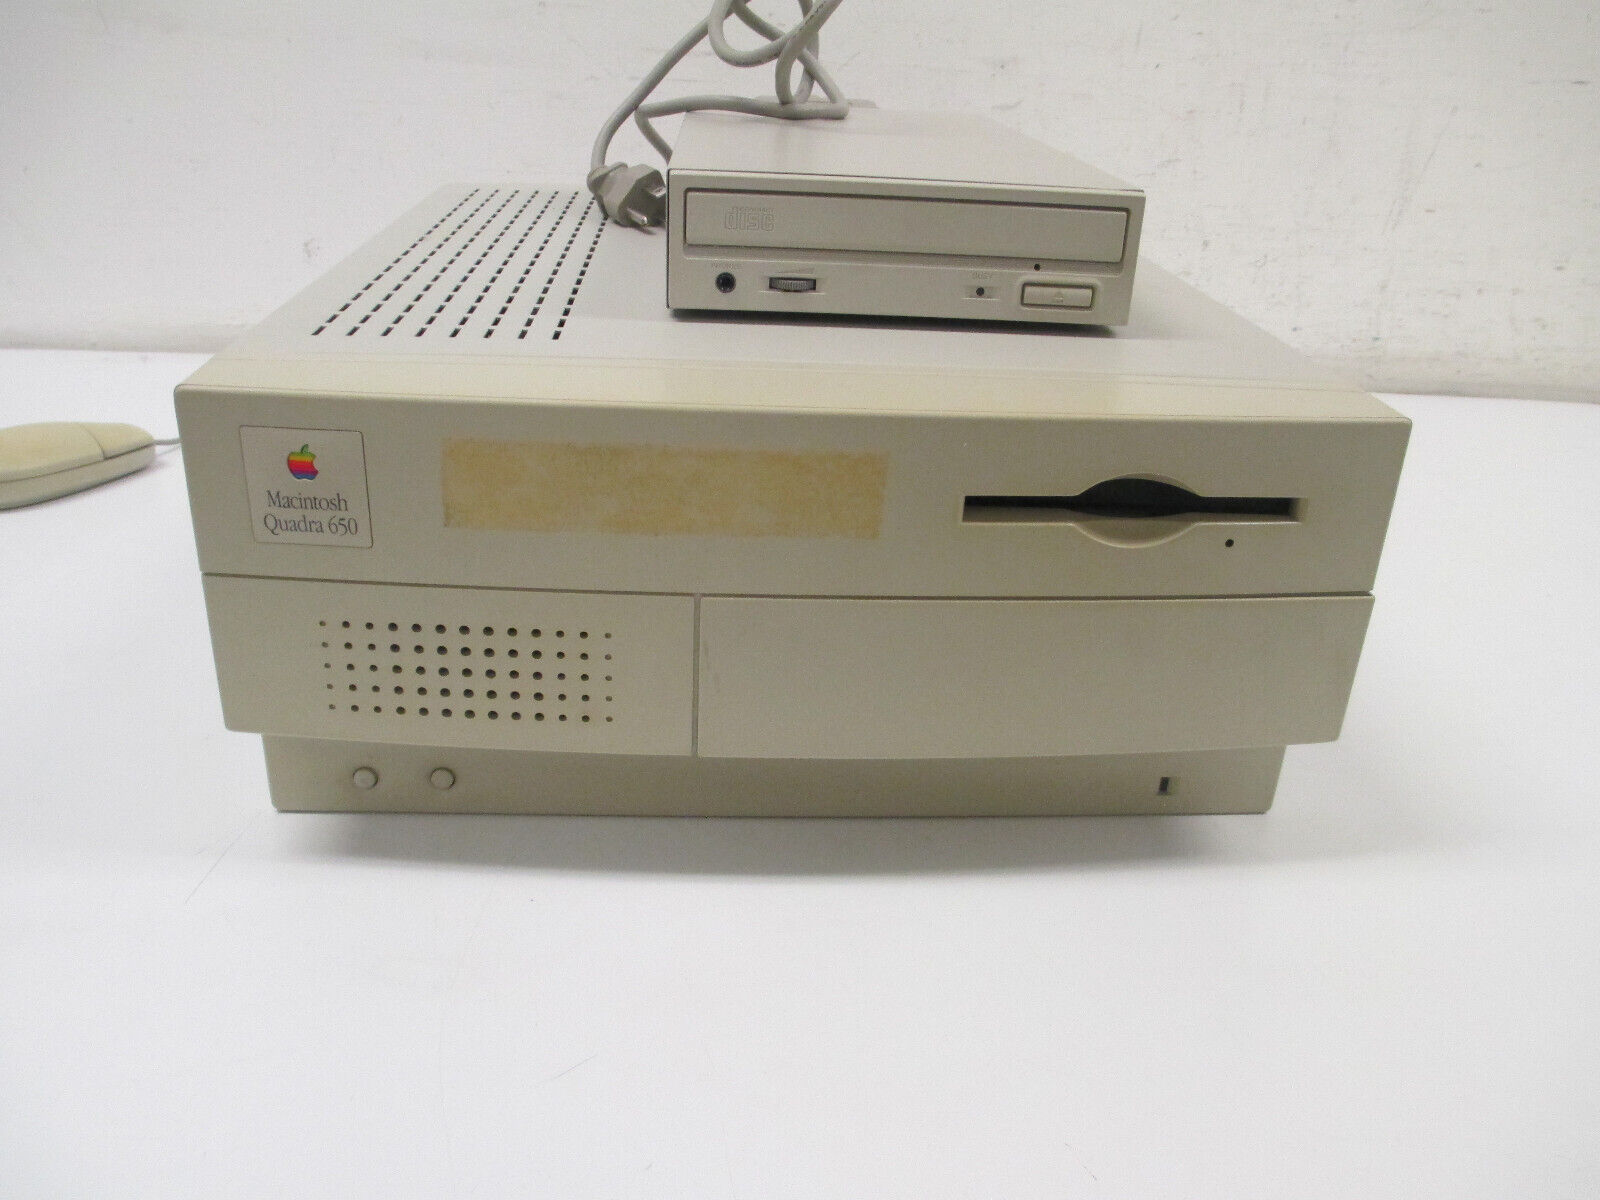 Vintage Apple Macintosh Quadra 650 Model M2118 w desktop bus mouse II & CD drive